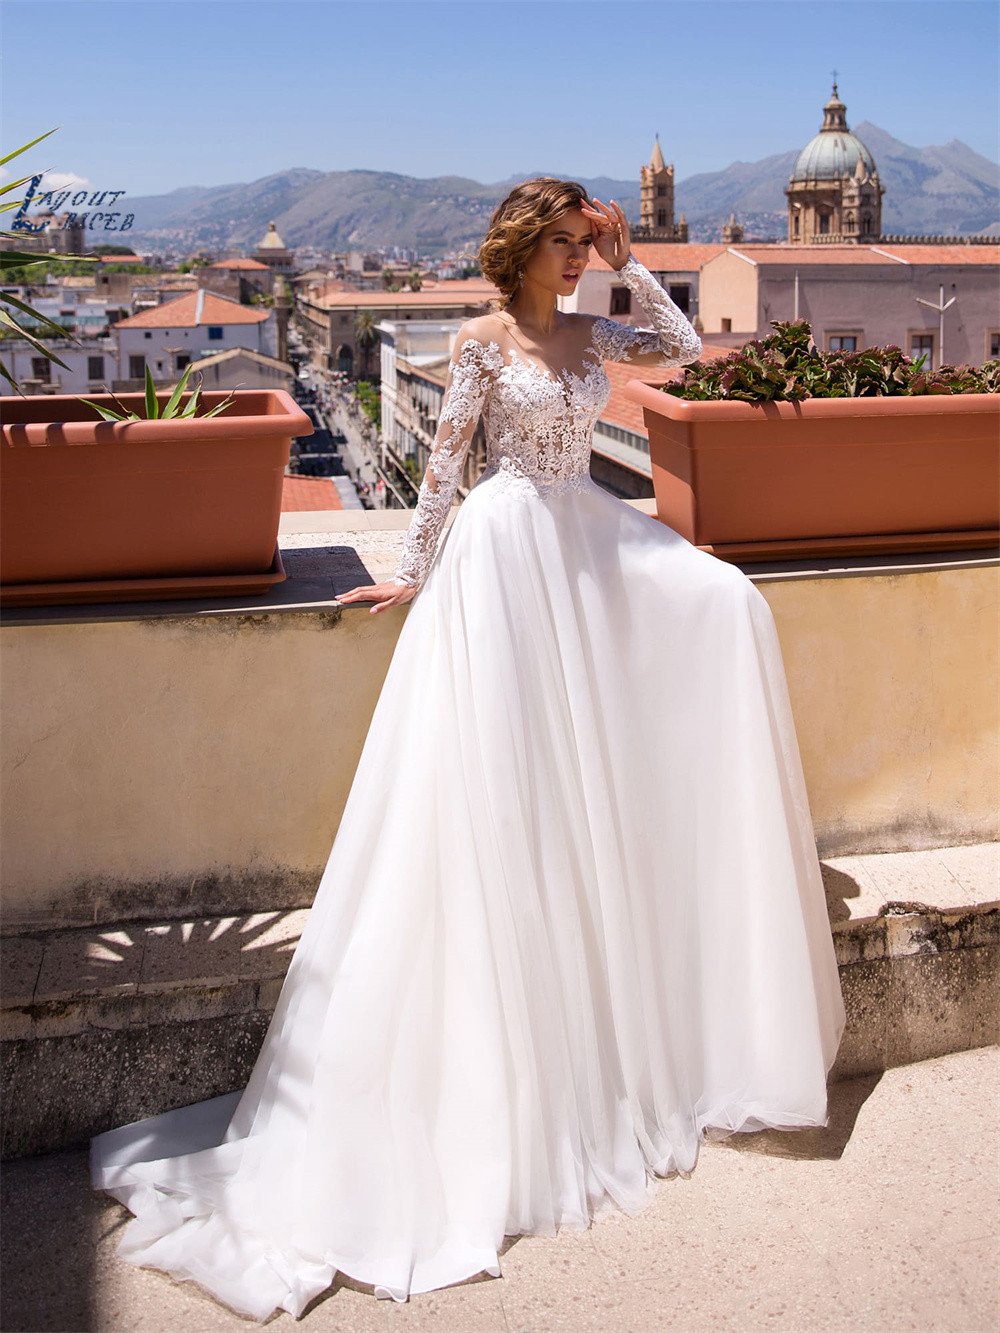 Bohemian Long Sleeve Wedding Dresses A Line Illusion Lace Appliques Scoop Bride Bridal Gowns